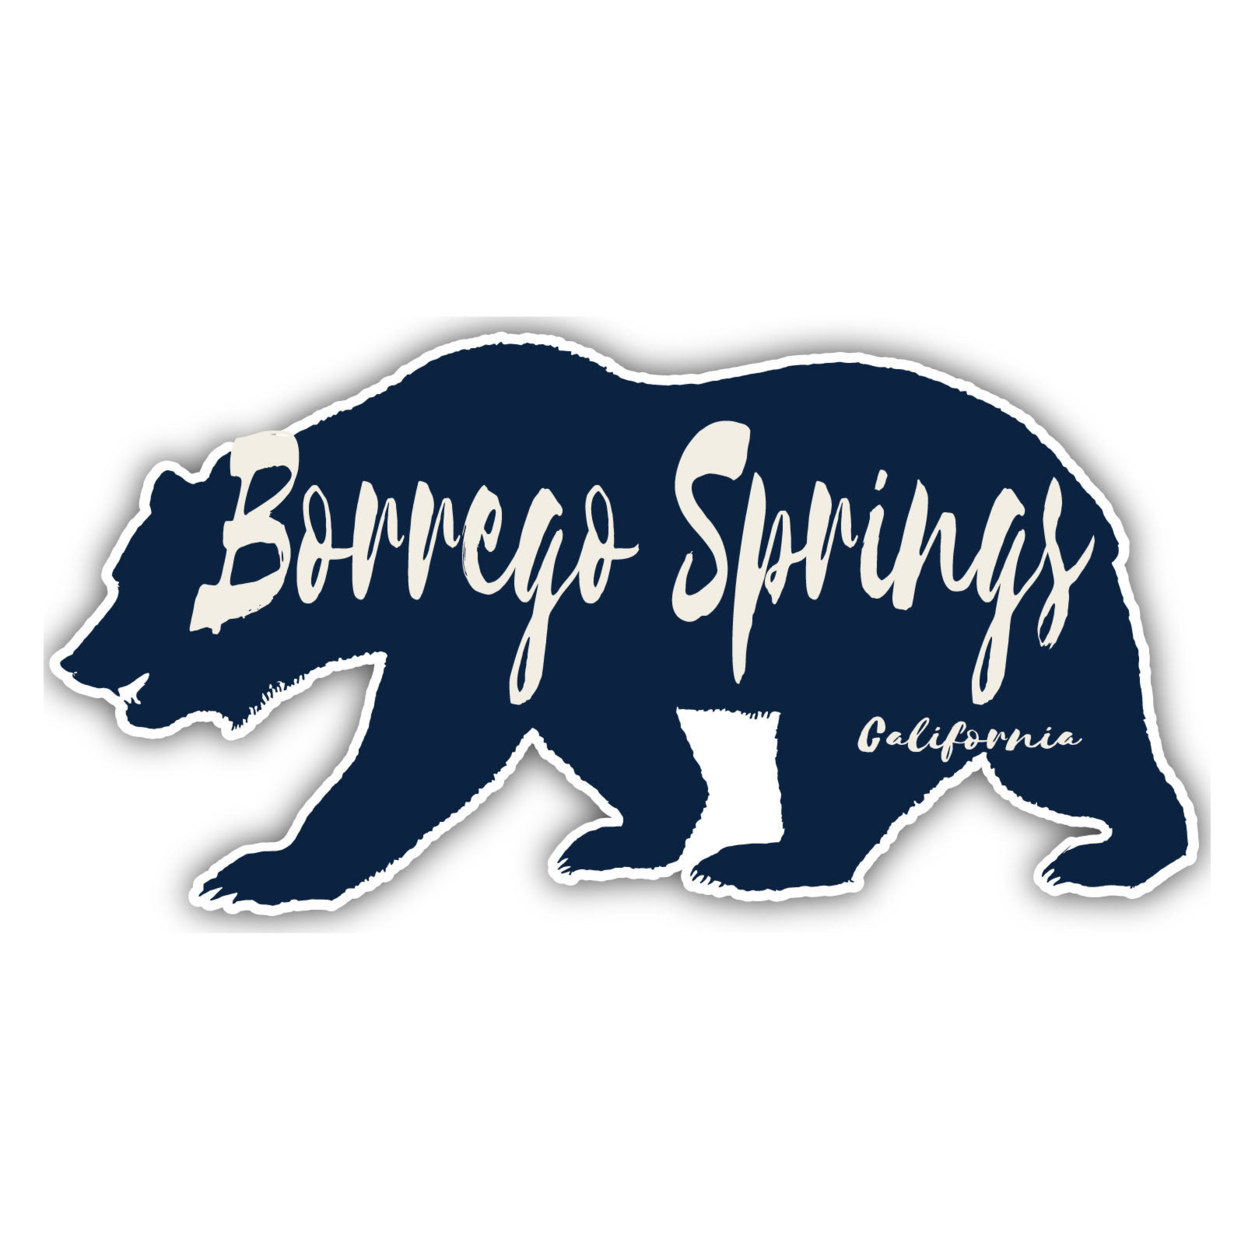 Borrego Springs California Souvenir Decorative Stickers (Choose Theme And Size) - Single Unit, 8-Inch, Bear